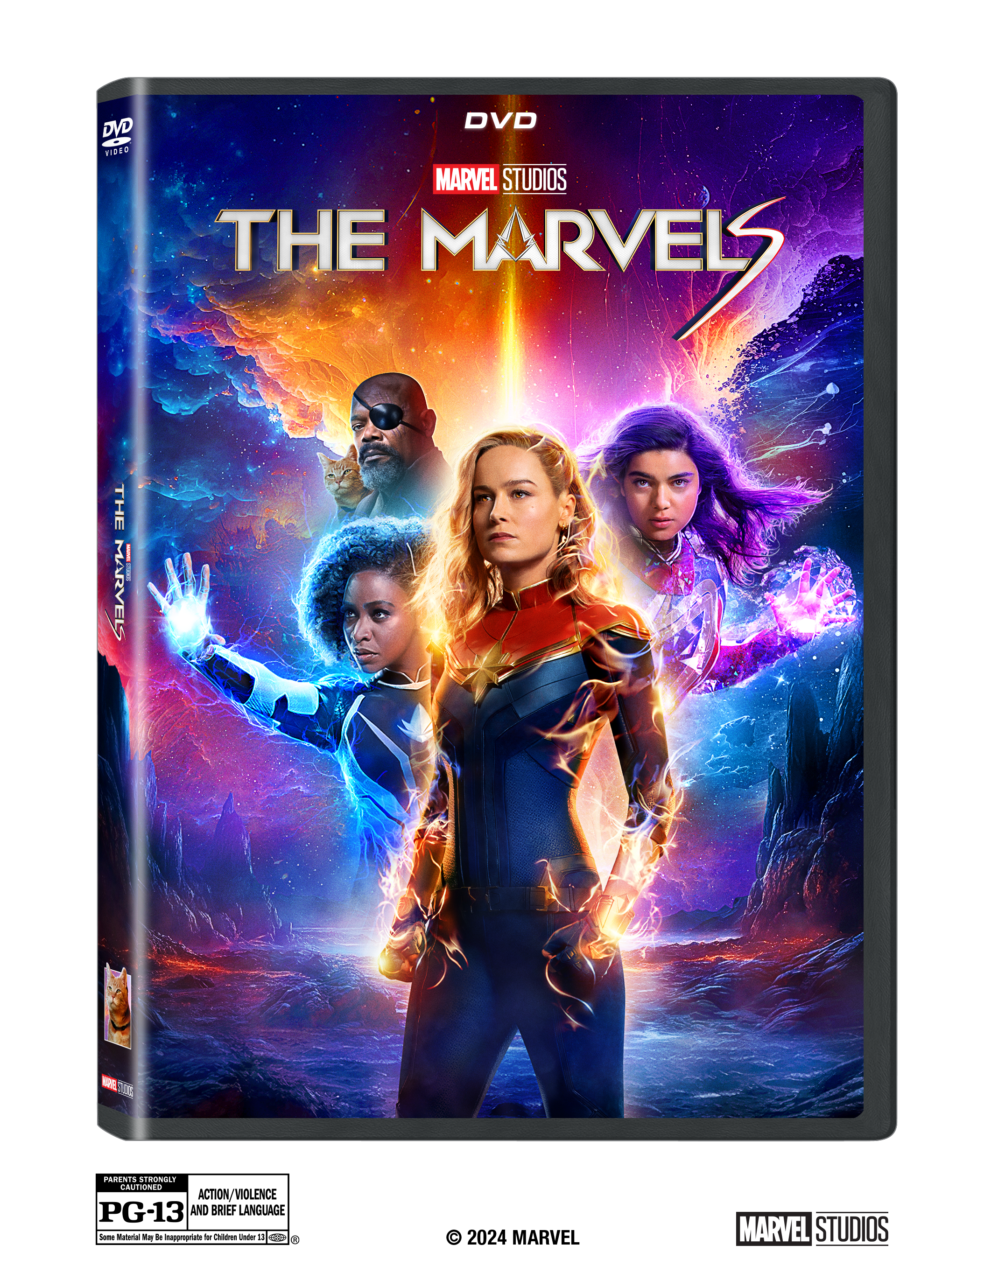 The Marvels DVD cover (Marvel Studios/Walt Disney Studios Home Entertainment)